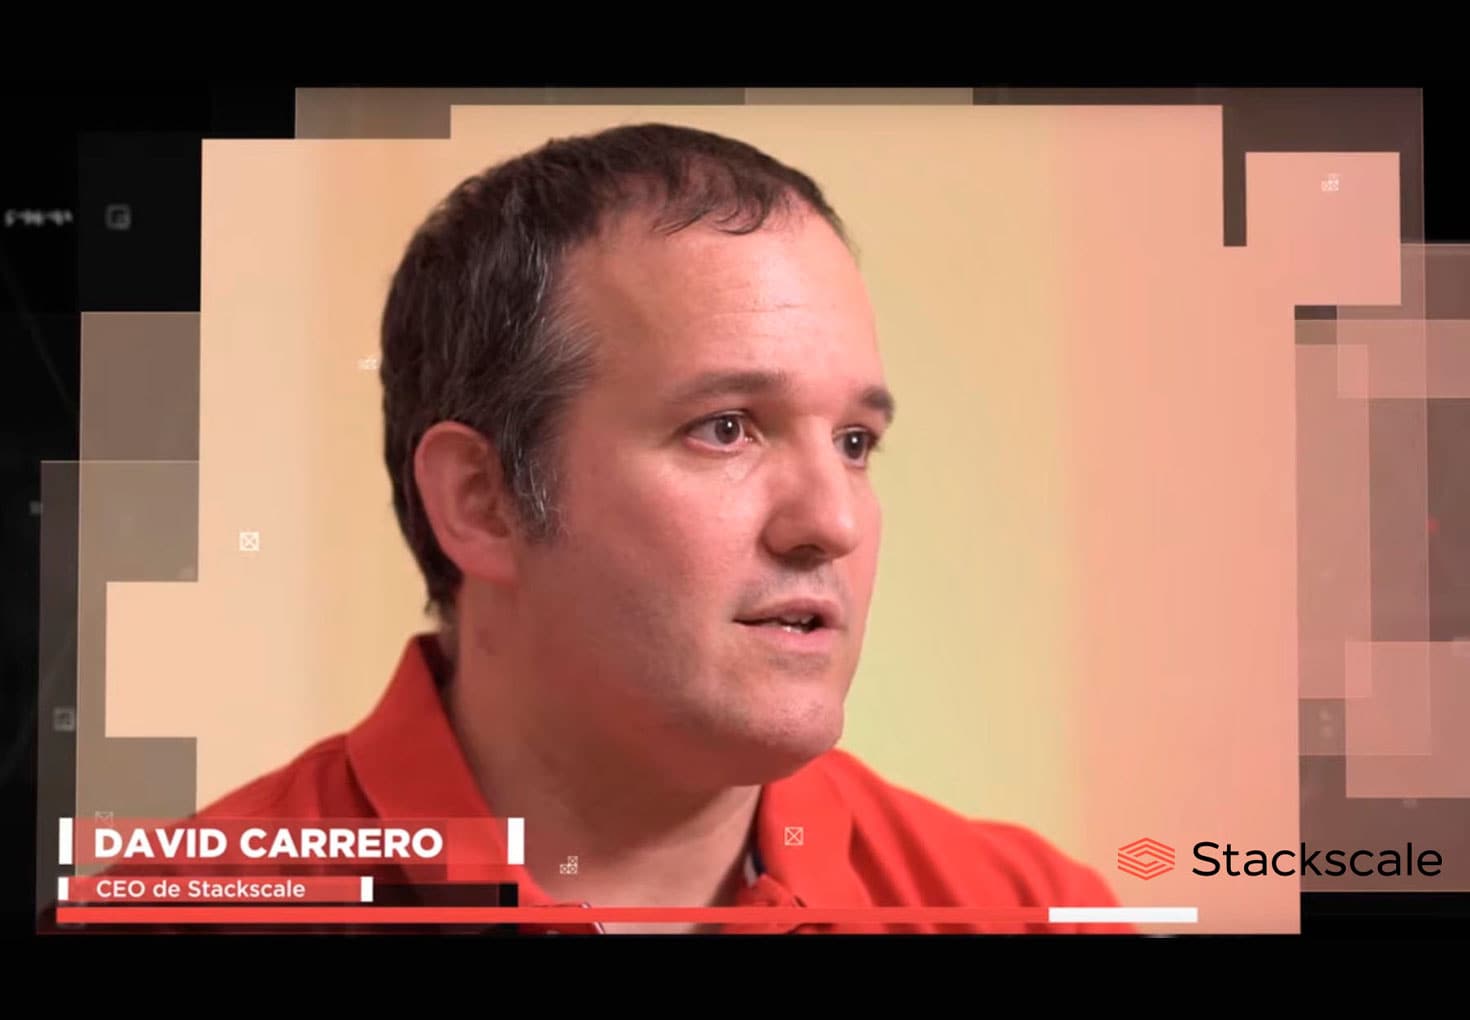 David Carrero, Stackscale co-founder, in the cybersecurity documentary "El enemigo anónimo"